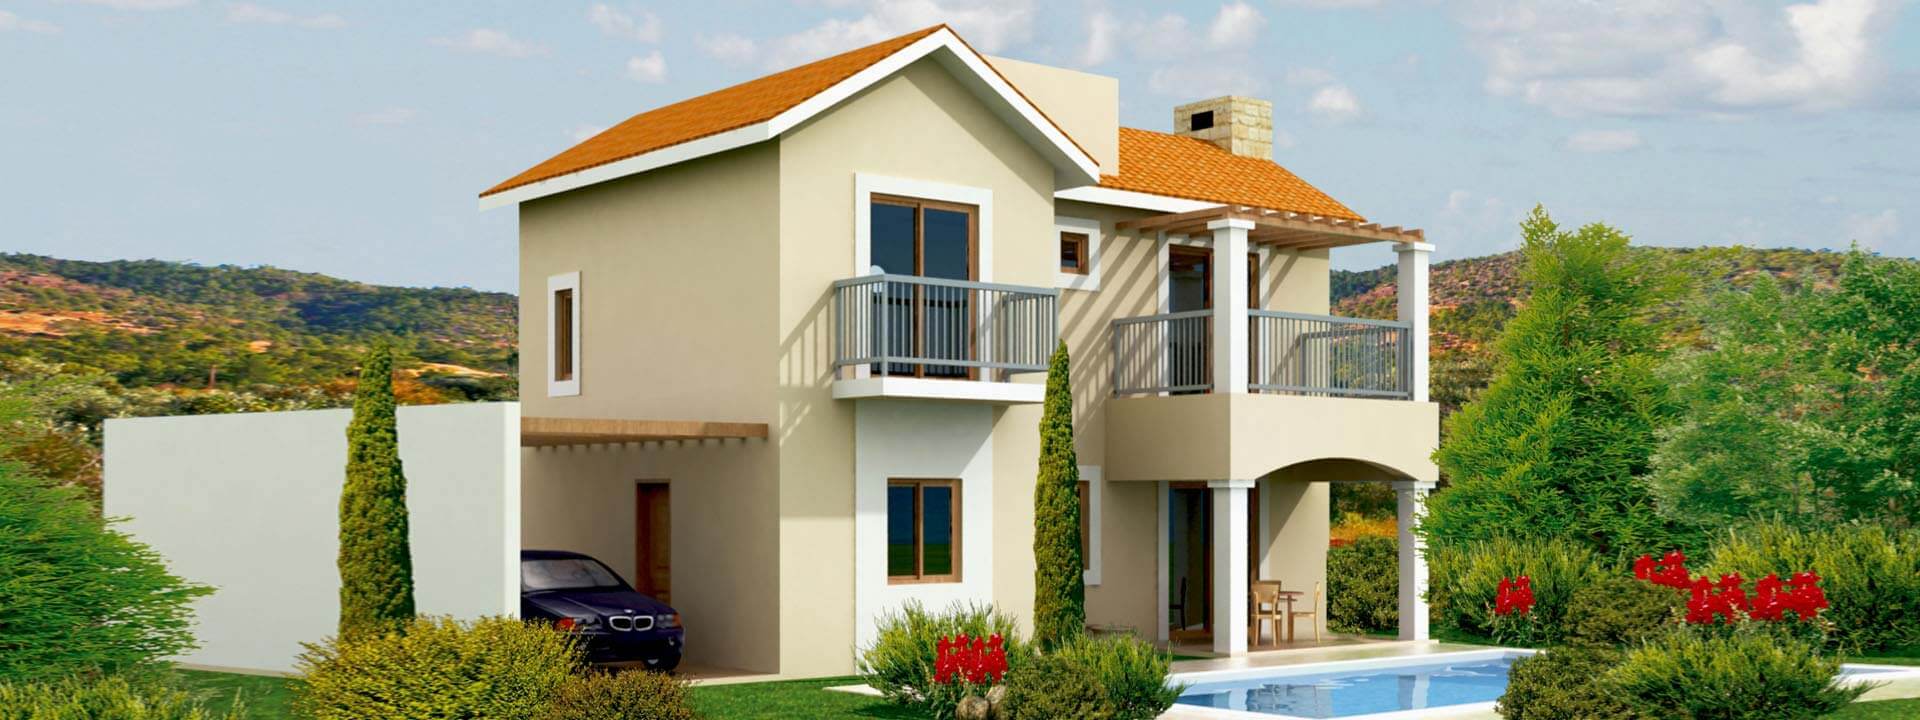 Limassol Monagroulli Hills 2 Bedroom Villa For Sale RSD0340